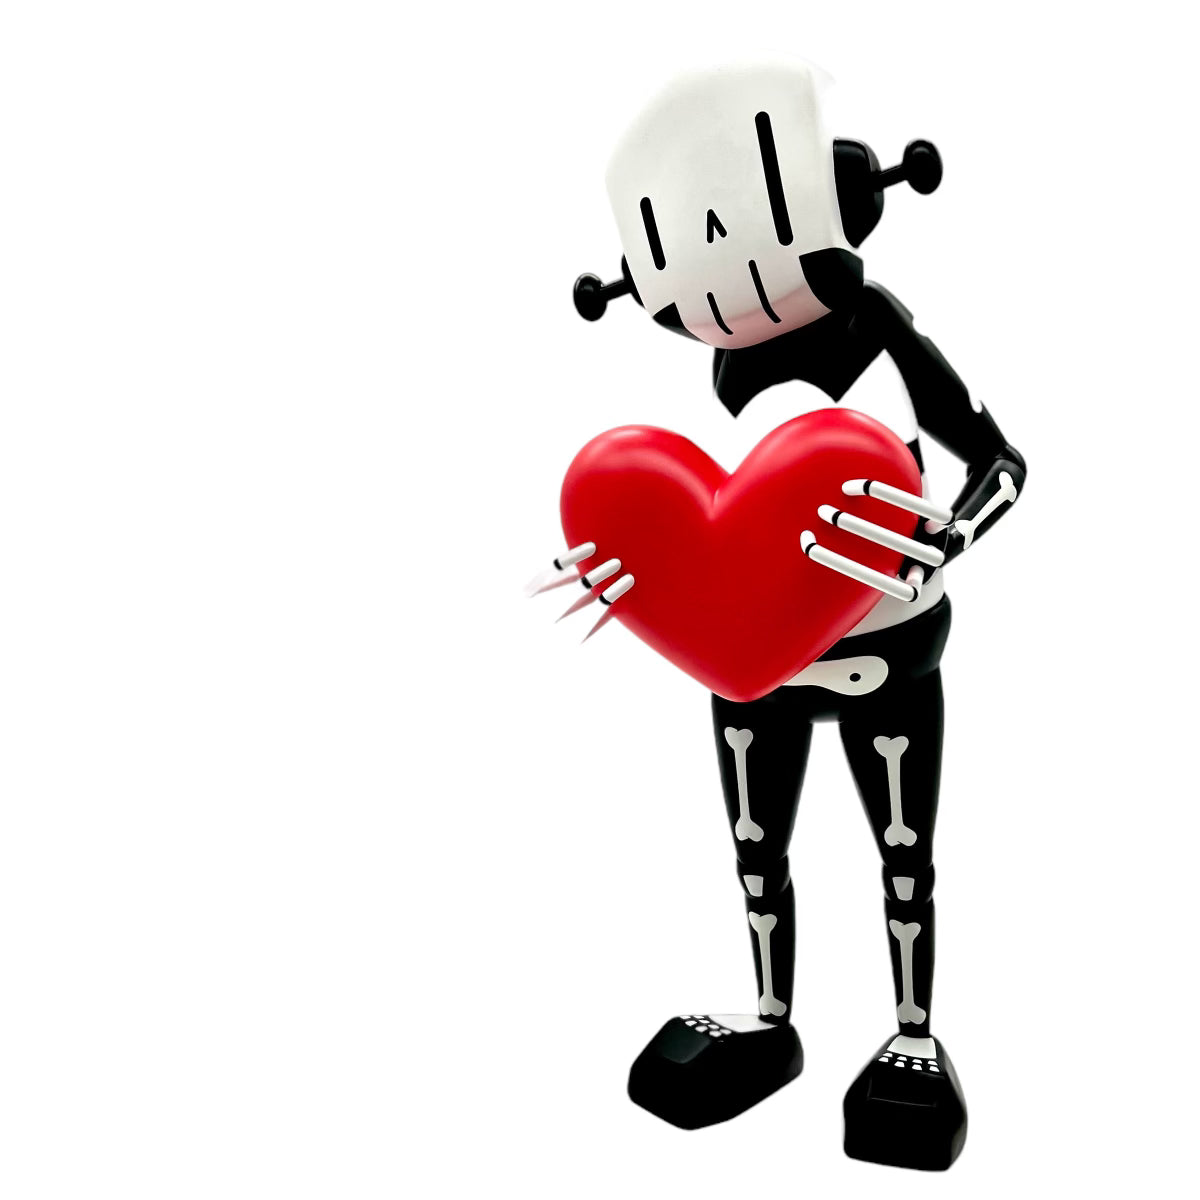 Chris RWK "Robot With Heart" Bones Edition